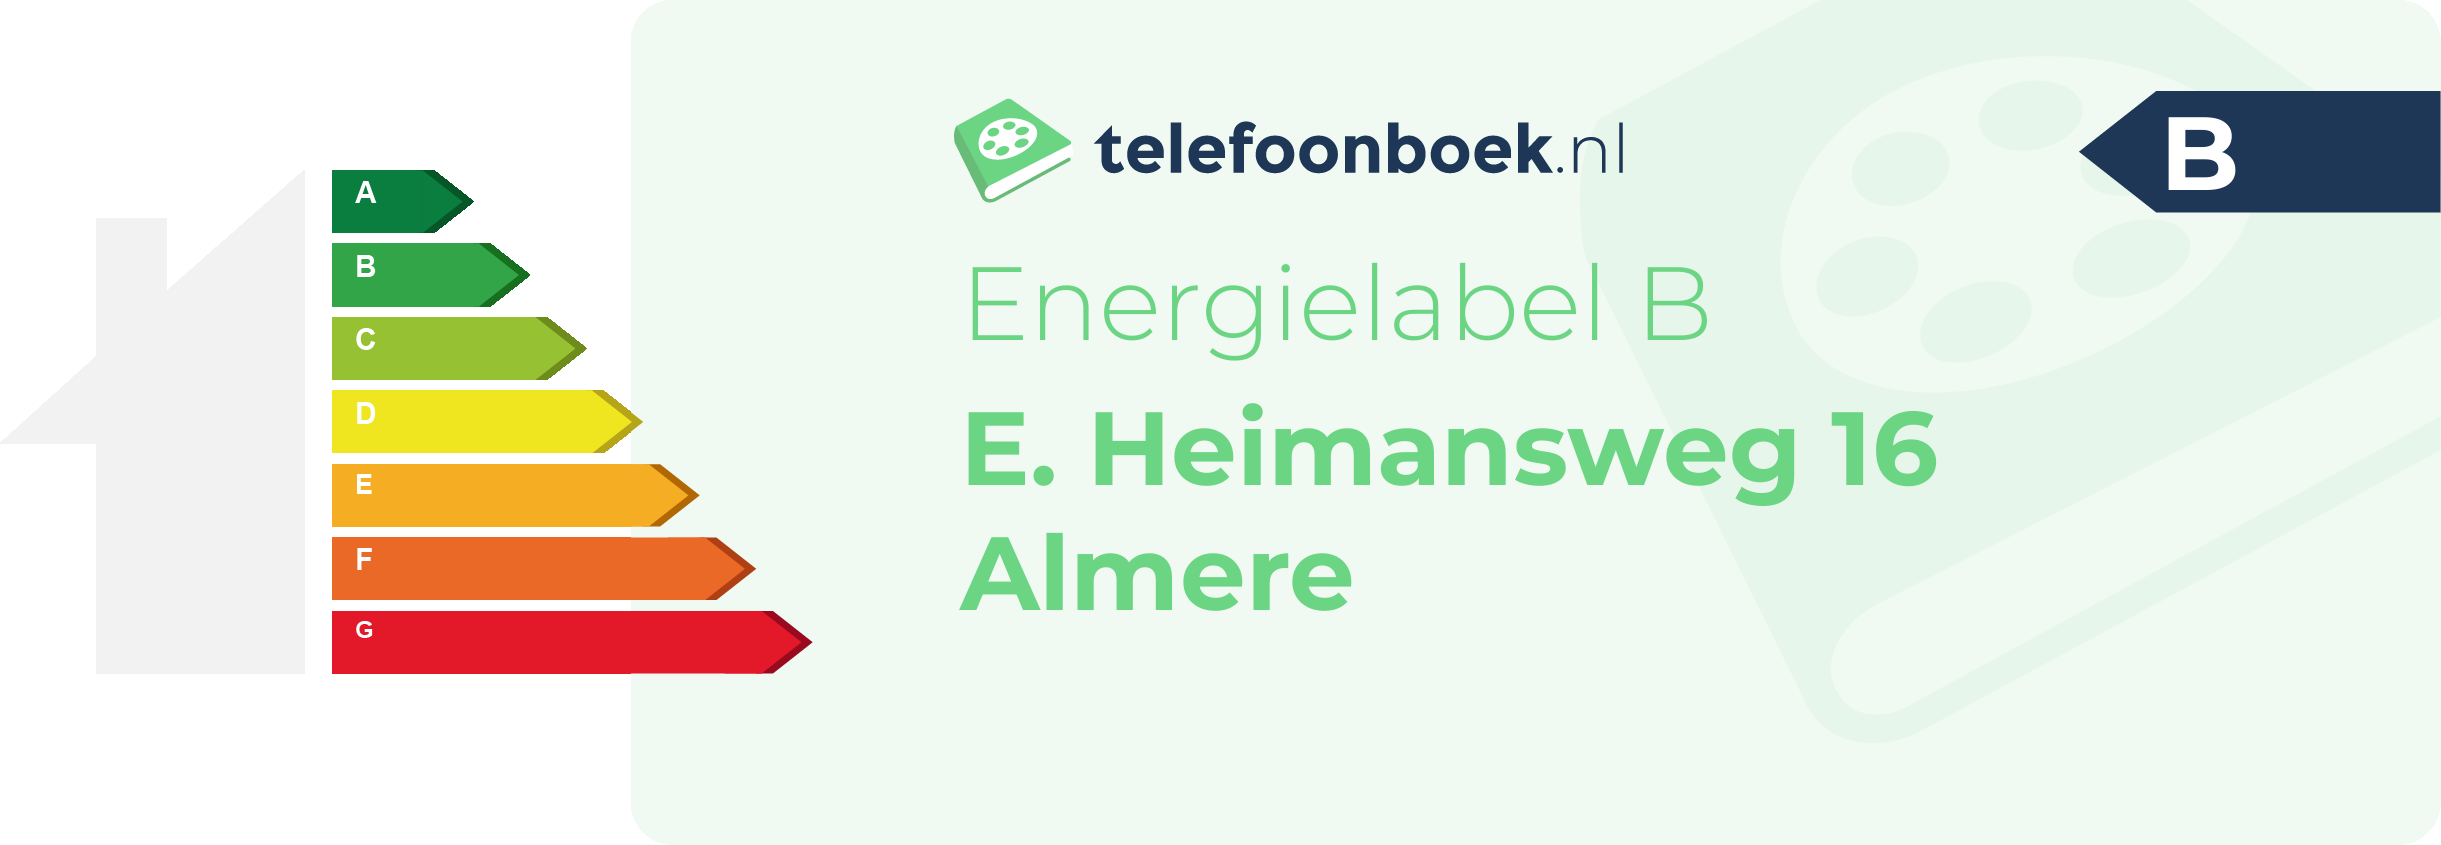 Energielabel E. Heimansweg 16 Almere